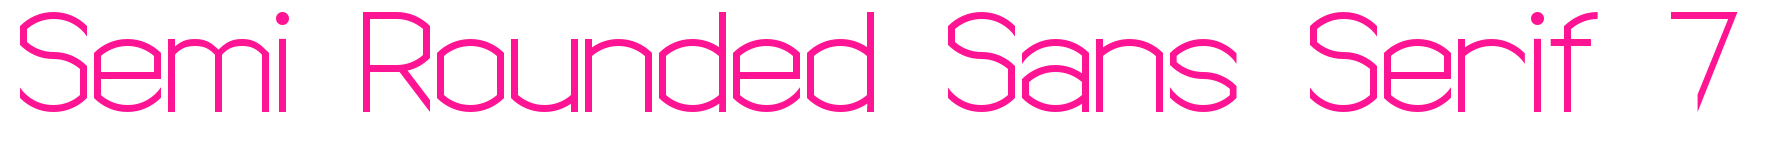 Semi Rounded Sans Serif 7预览图片